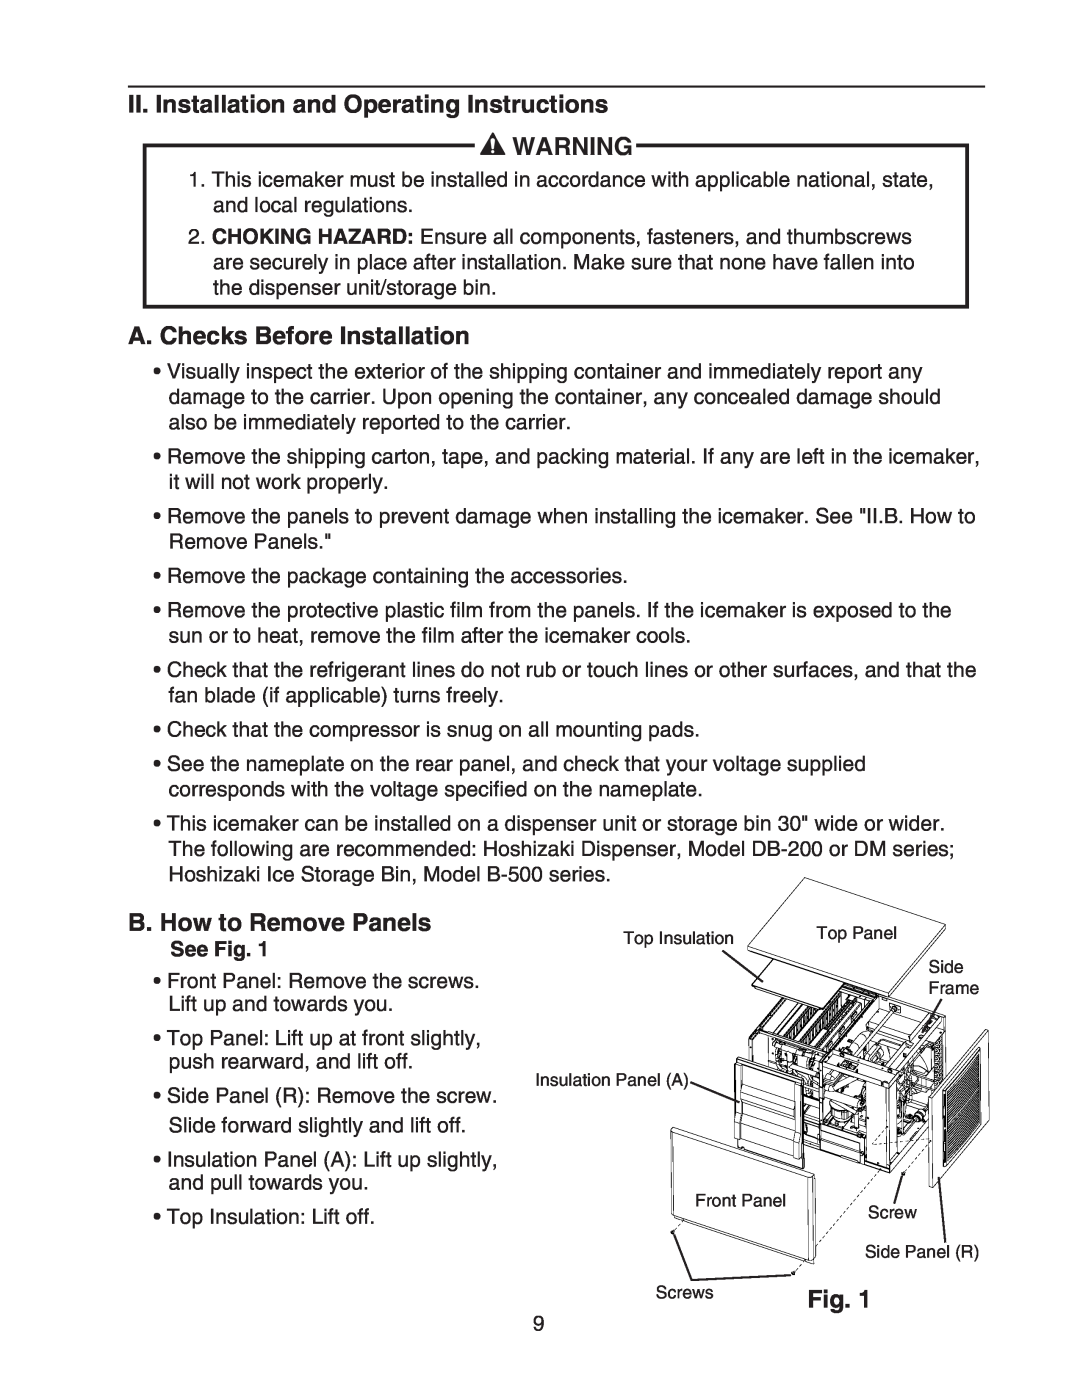 Hoshizaki KMD-450MAH II. Installation and Operating Instructions, A. Checks Before Installation, B. How to Remove Panels 